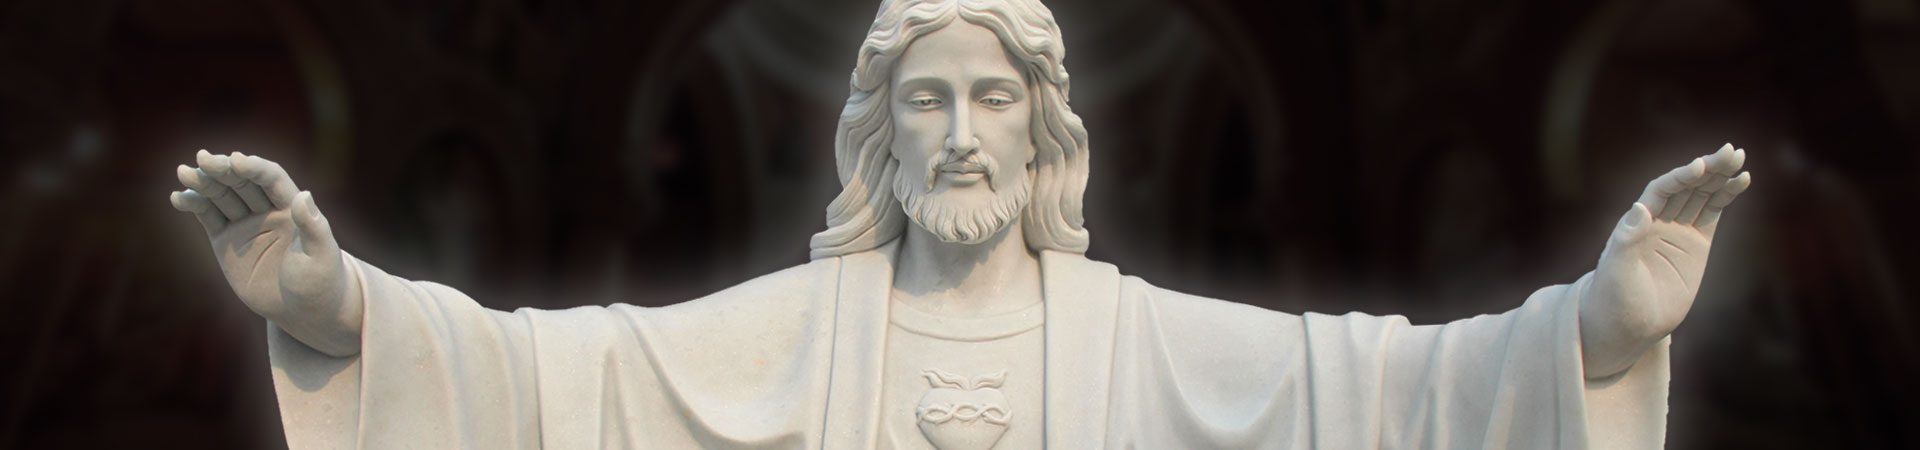 jesus christ statues for sale